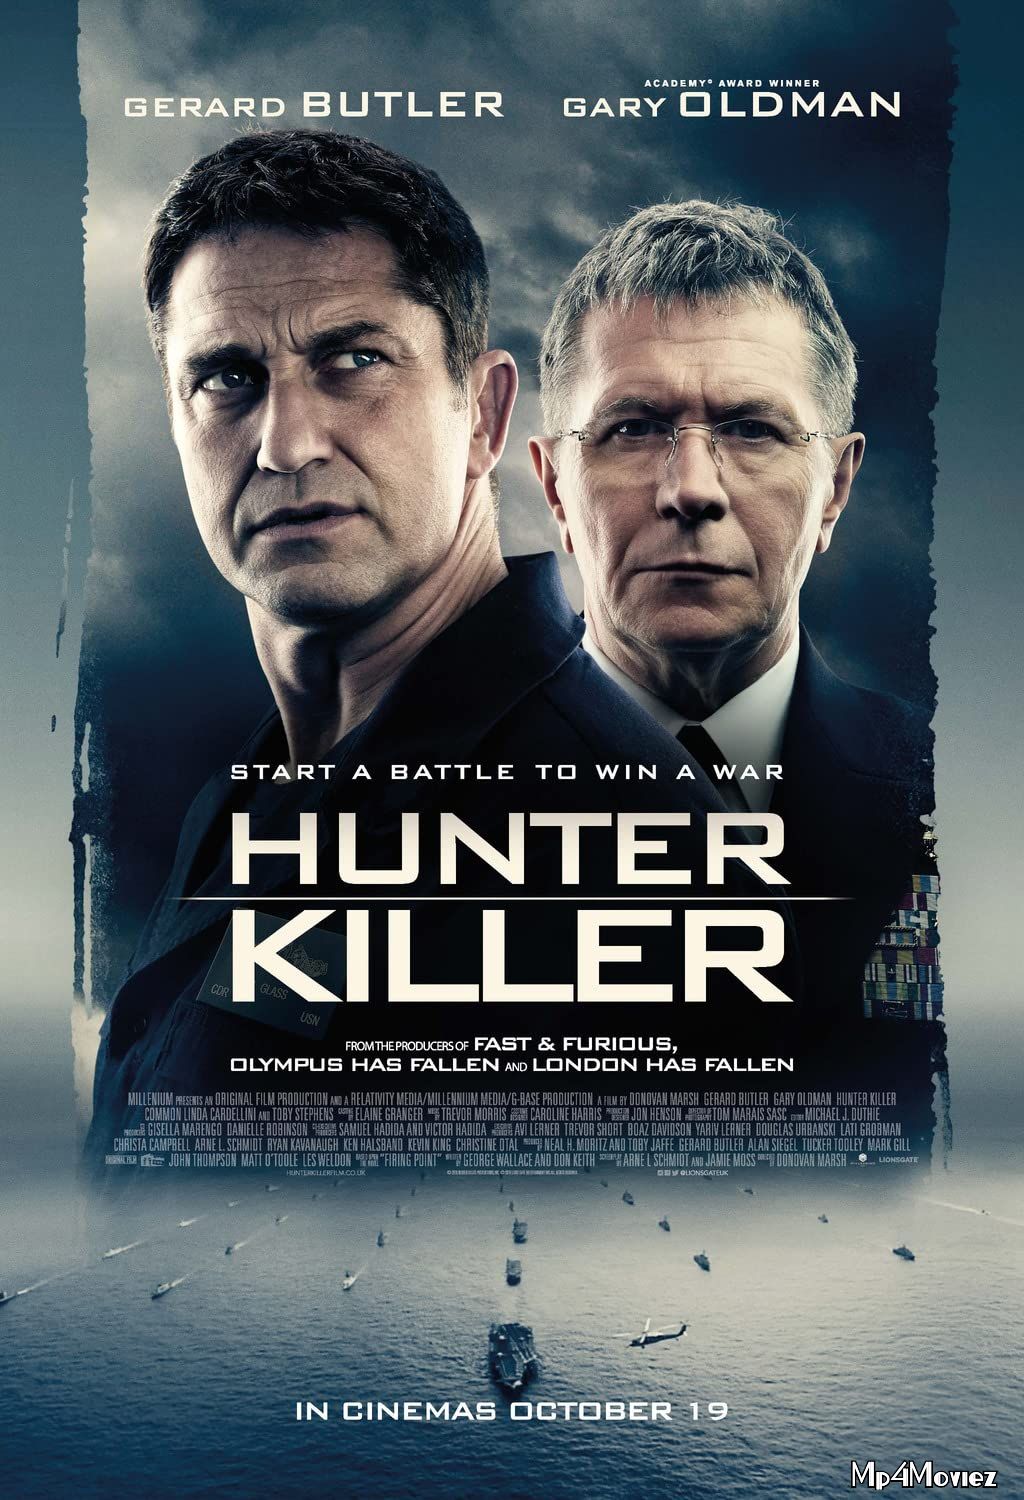 Hunter Killer 2018 Hindi Dubbed Full Movie download full movie